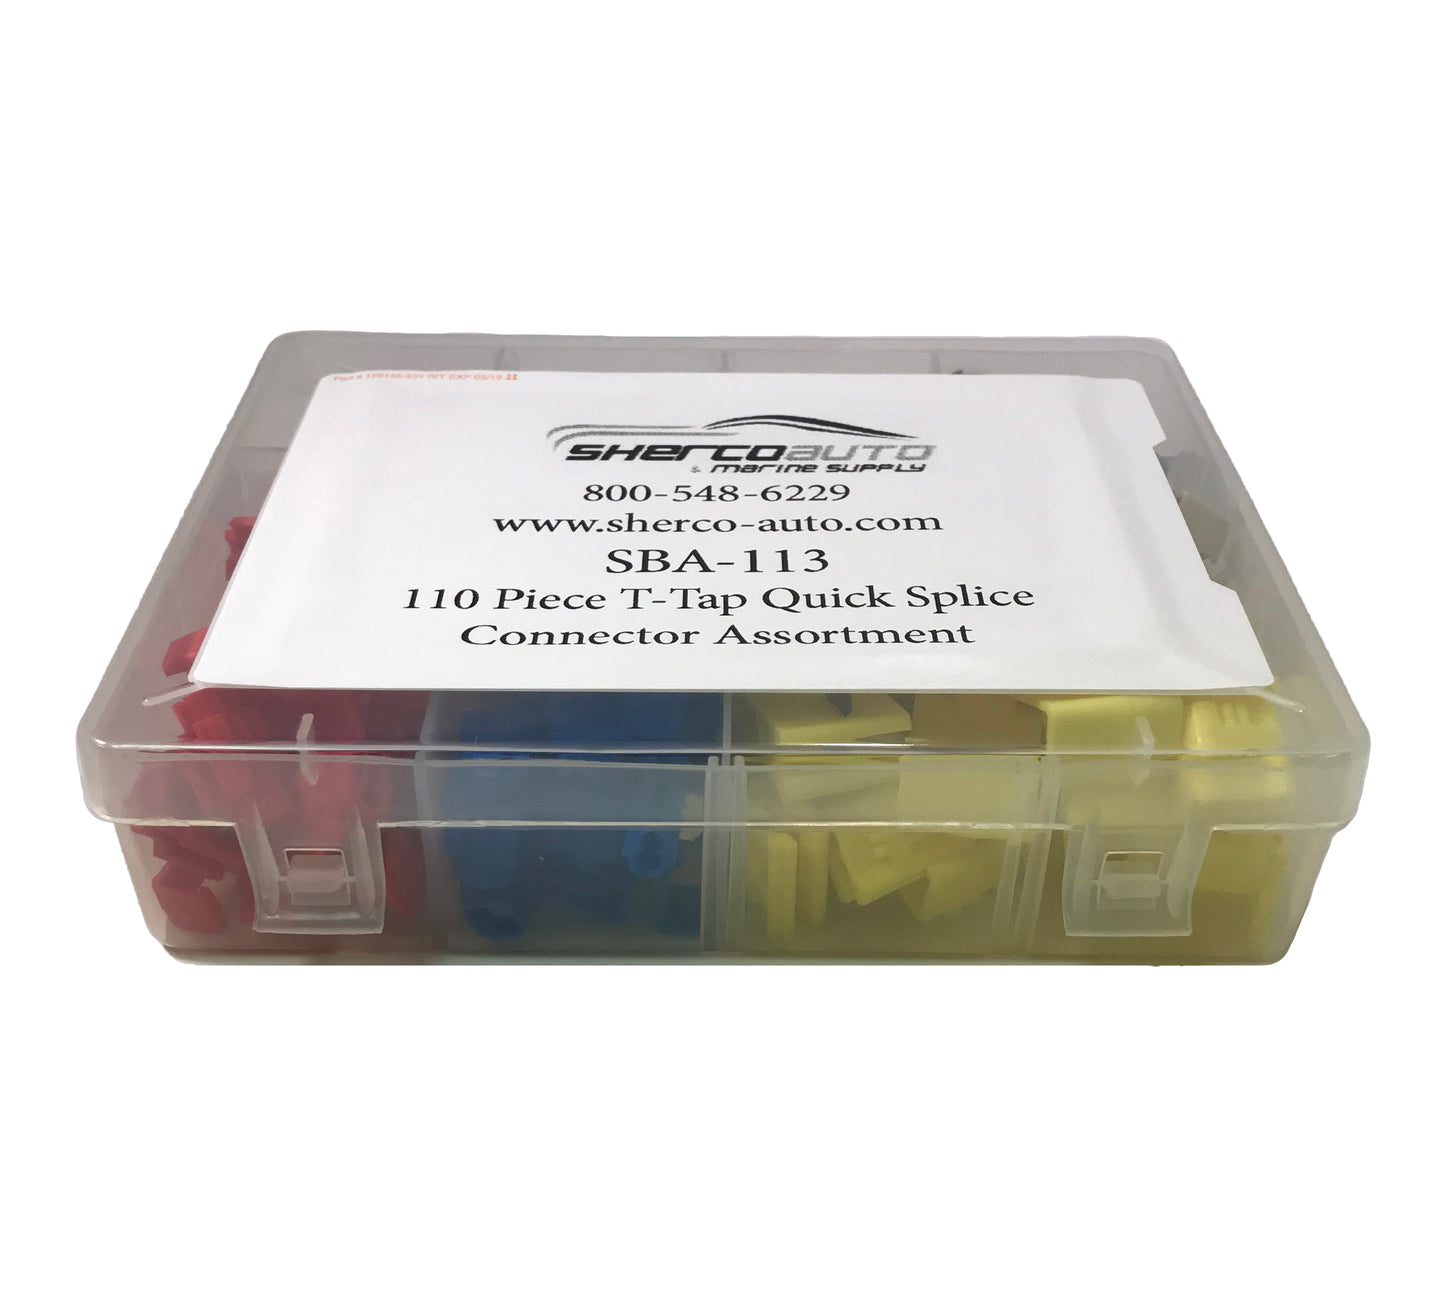 110 Piece T-Tap Quick Splice Terminal Connector Assortment Kit